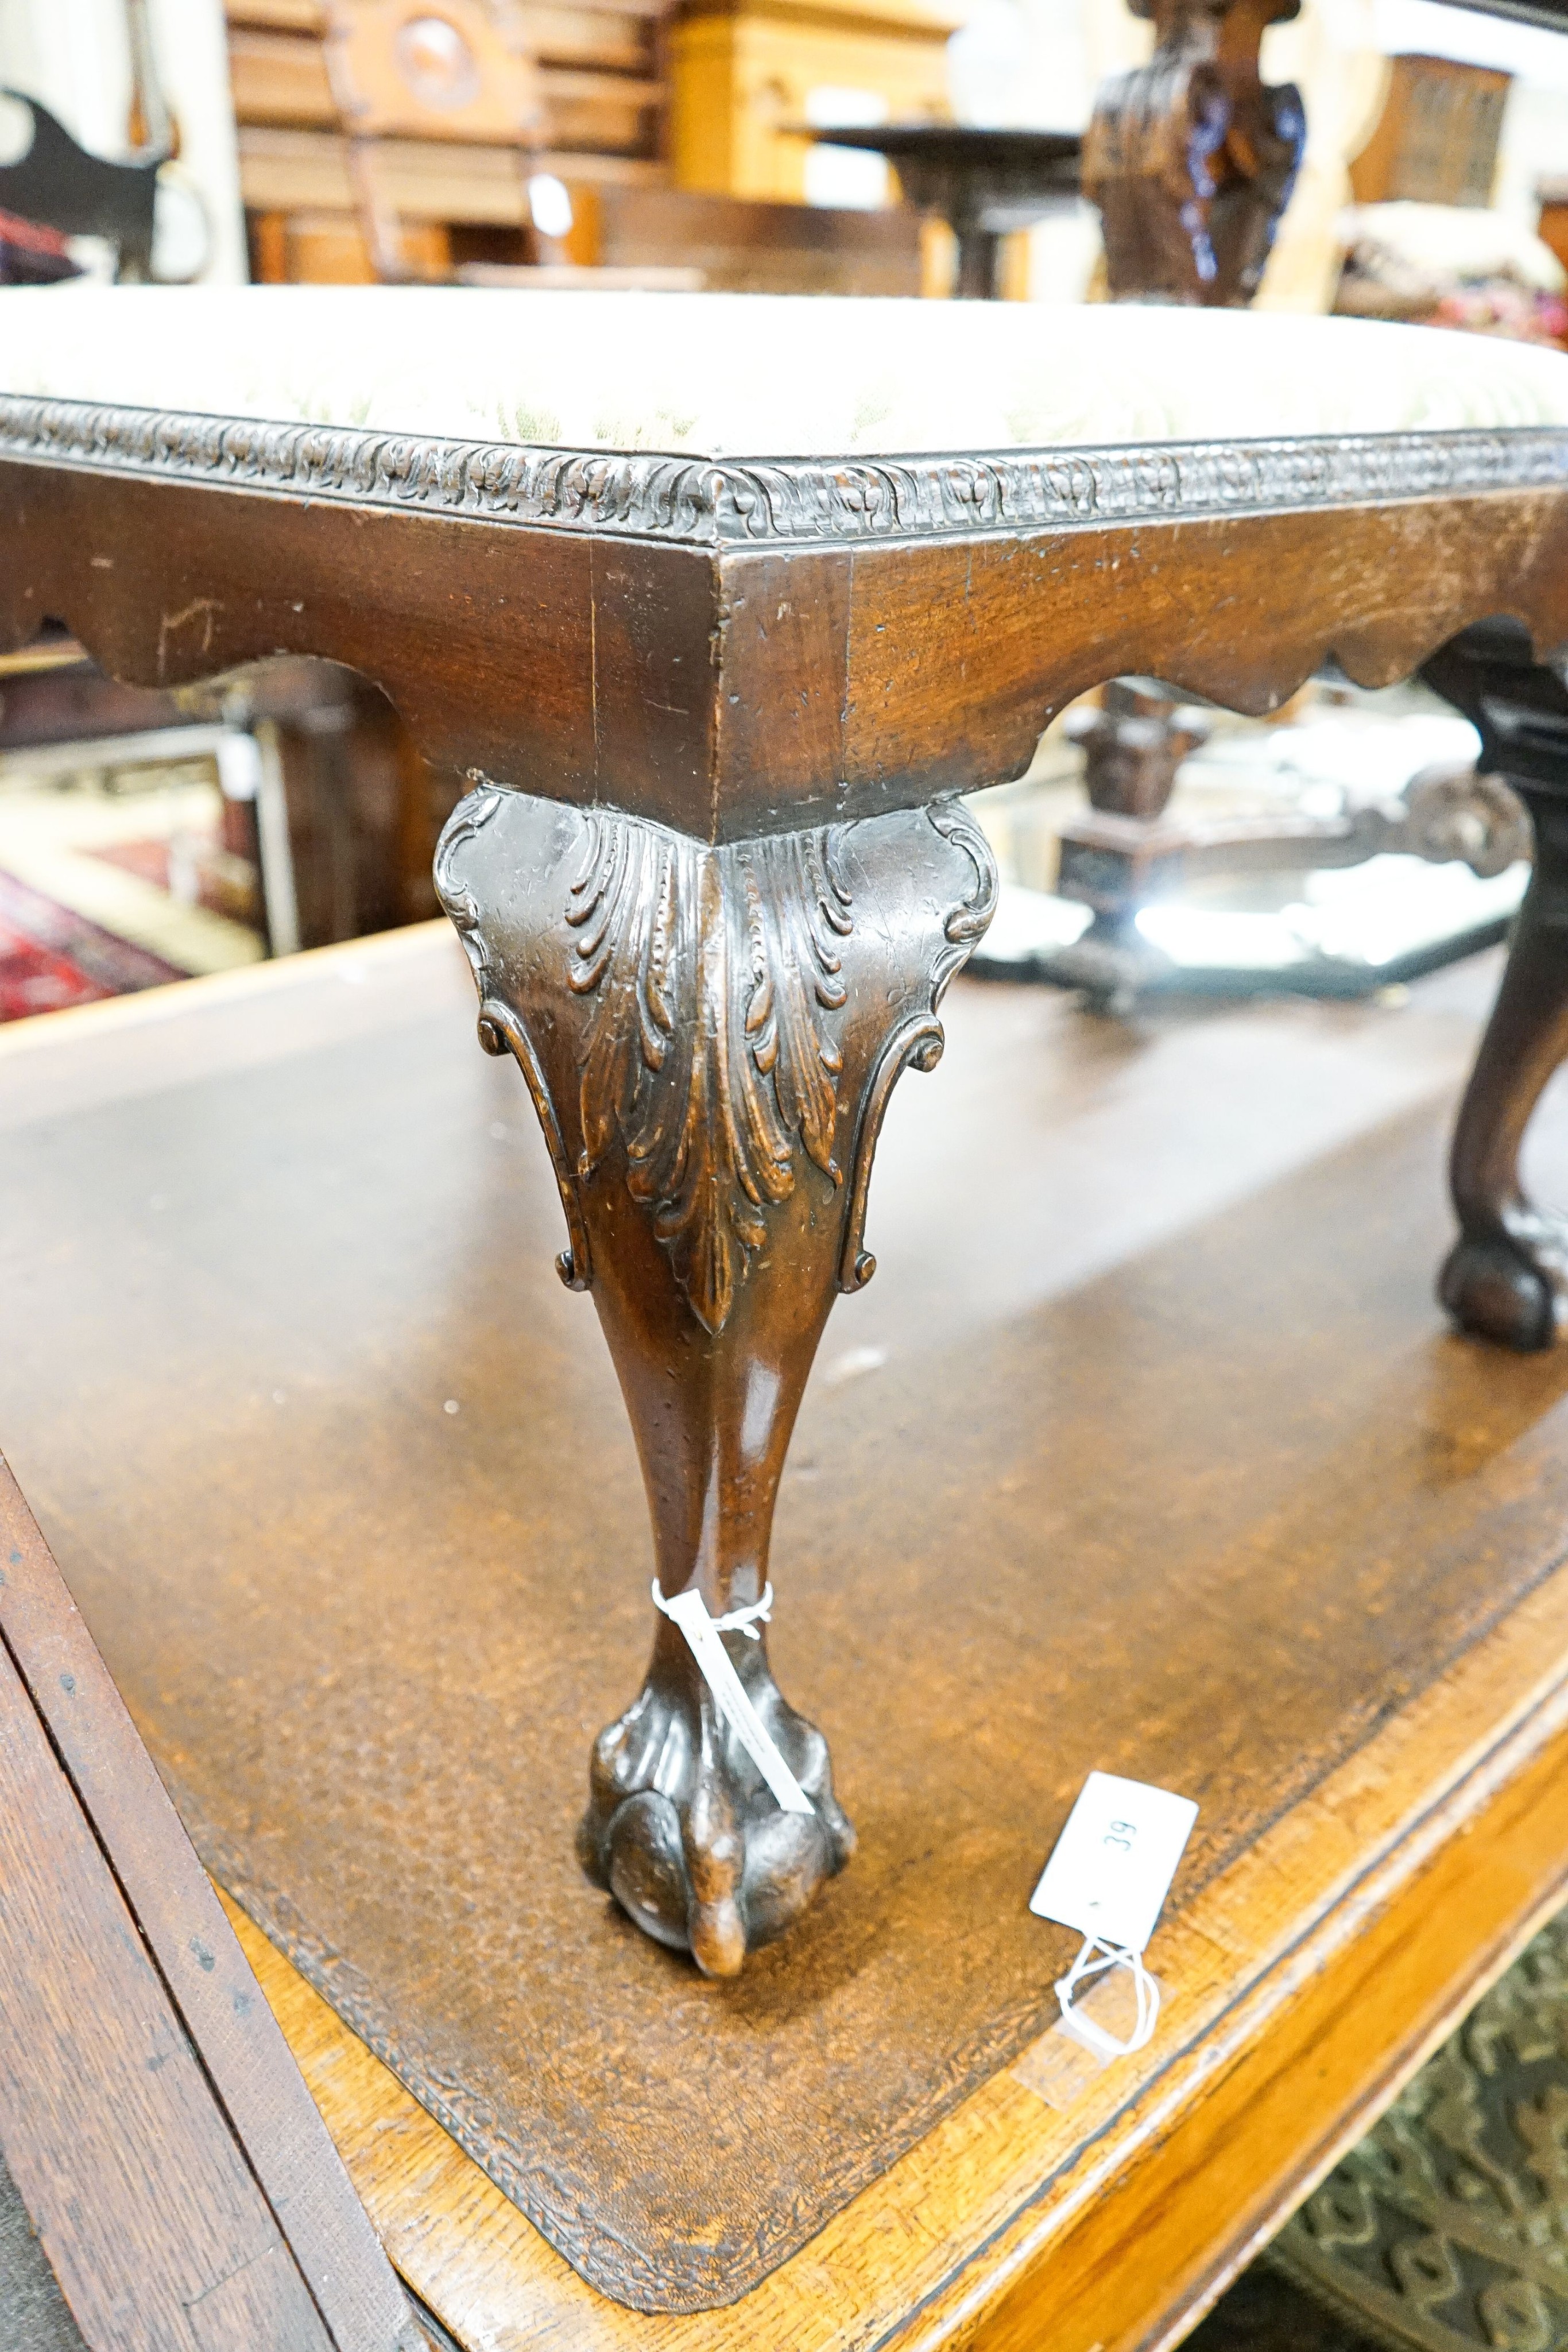 A Chippendale revival rectangular mahogany stool, width 90cm, depth 60cm, height 43cm